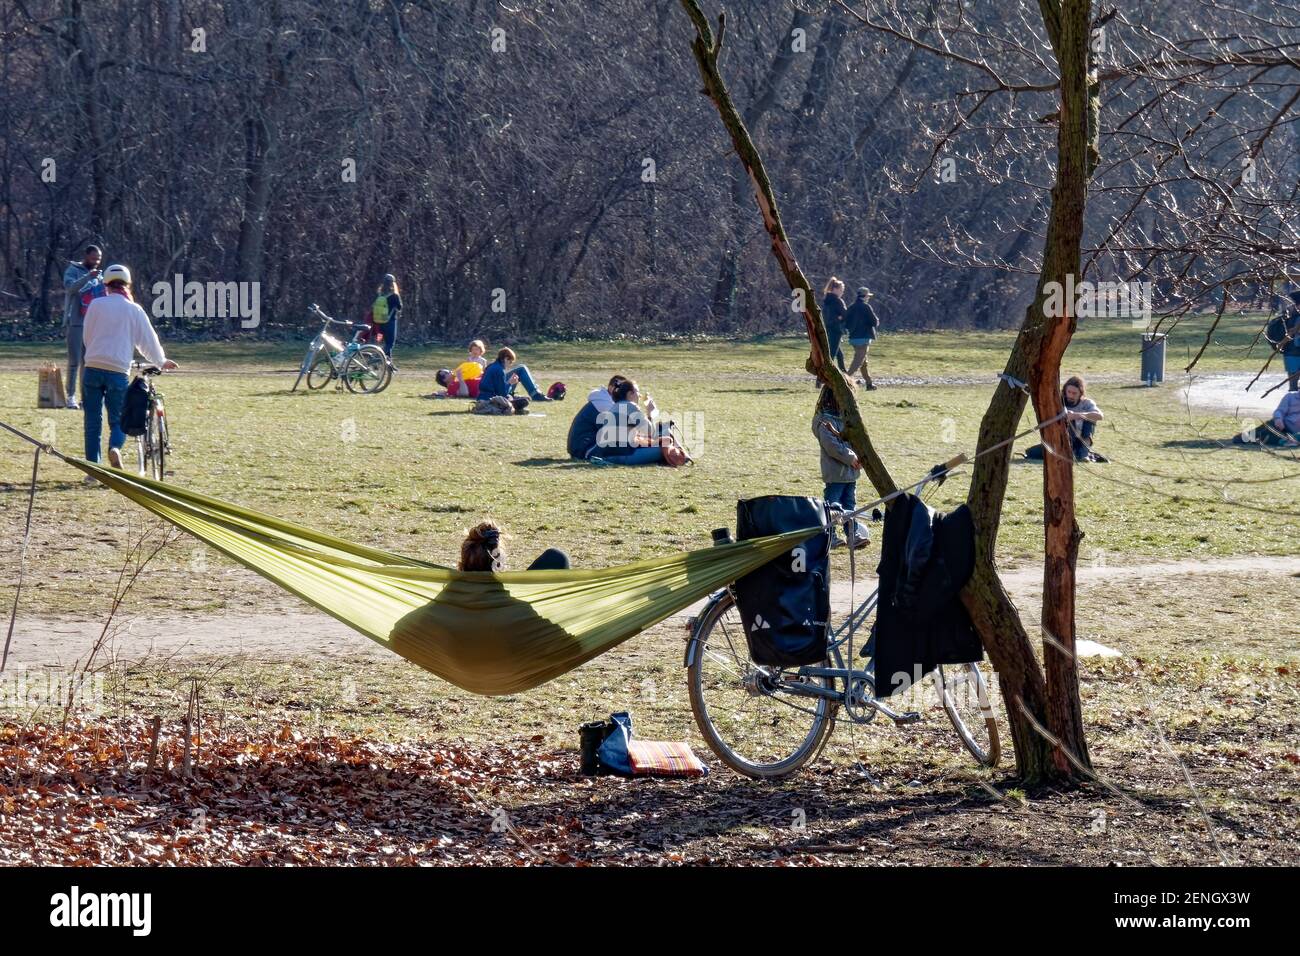 Vorfruehling in Berlin Mitte Februar 2021 , Treptower Park, Junge Leute  geniessen das milde Fruehlingswetter . Haengematte, Fahrrad, Relaxen  Stockfotografie - Alamy